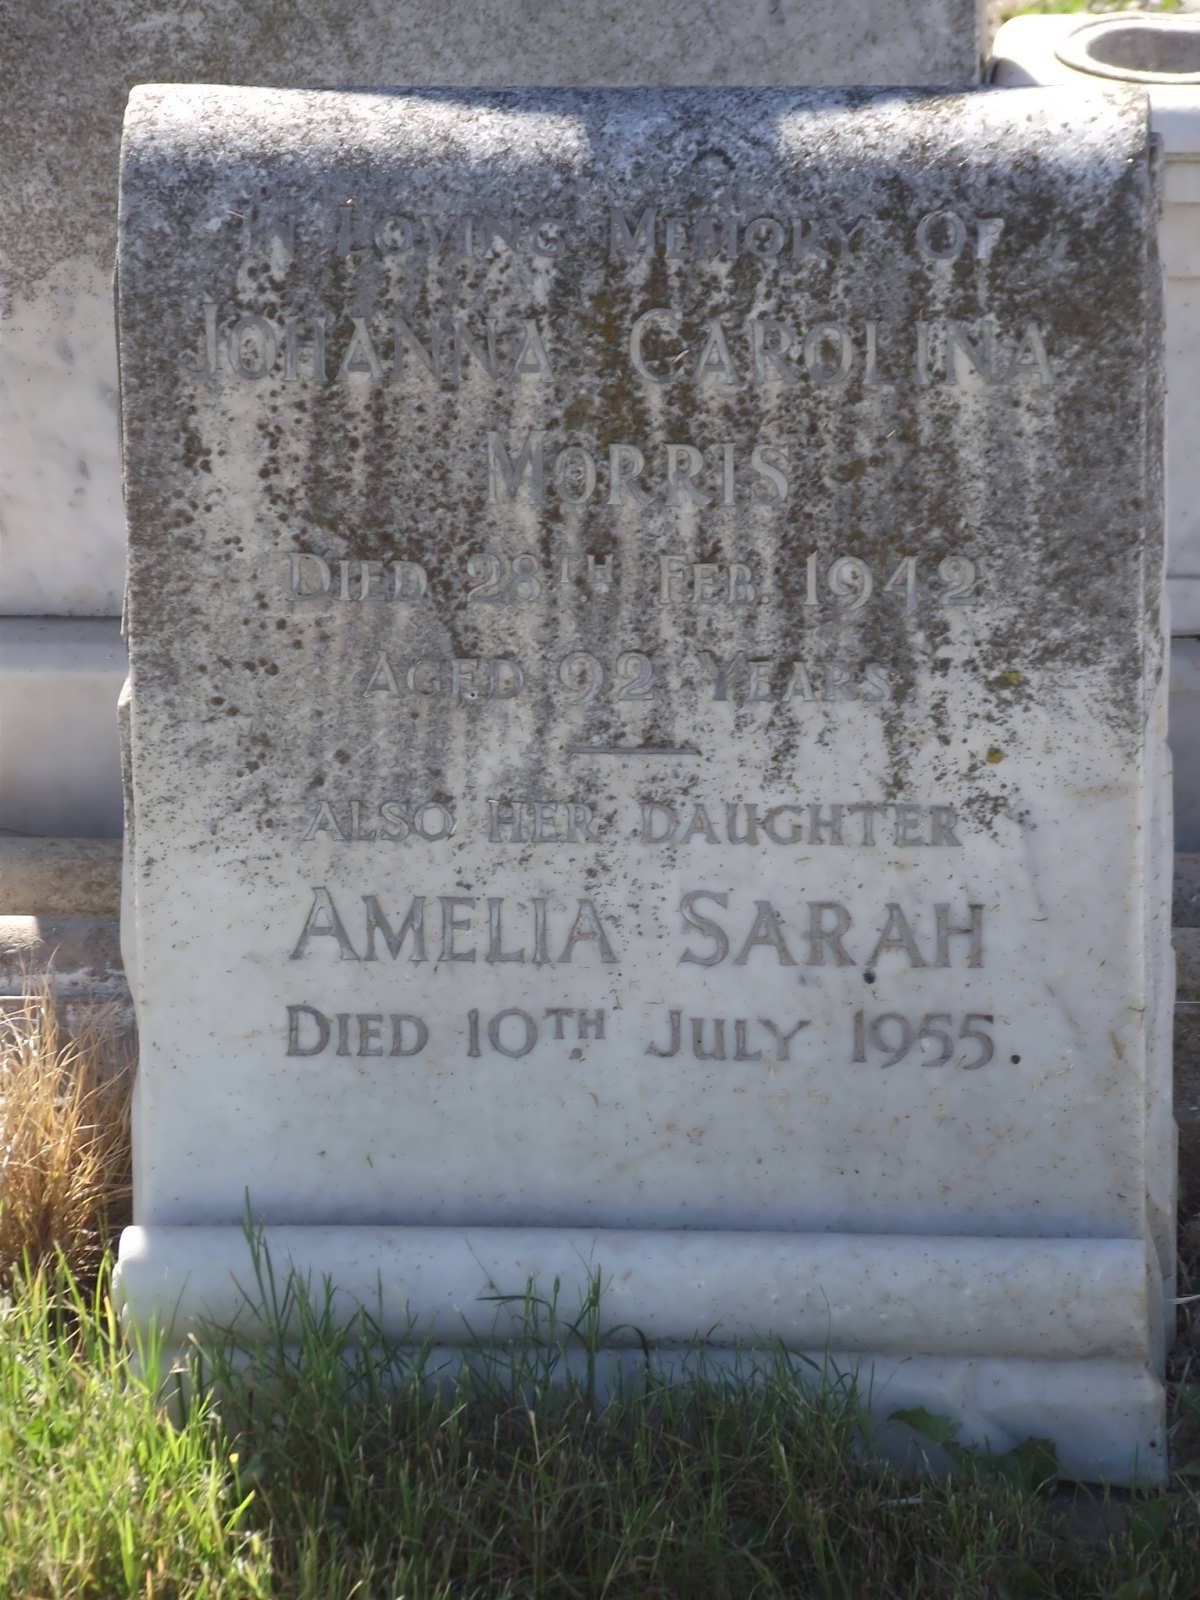 MORRIS Johanna Carolina -1942 :: MORRIS Amelia Sarah -1955